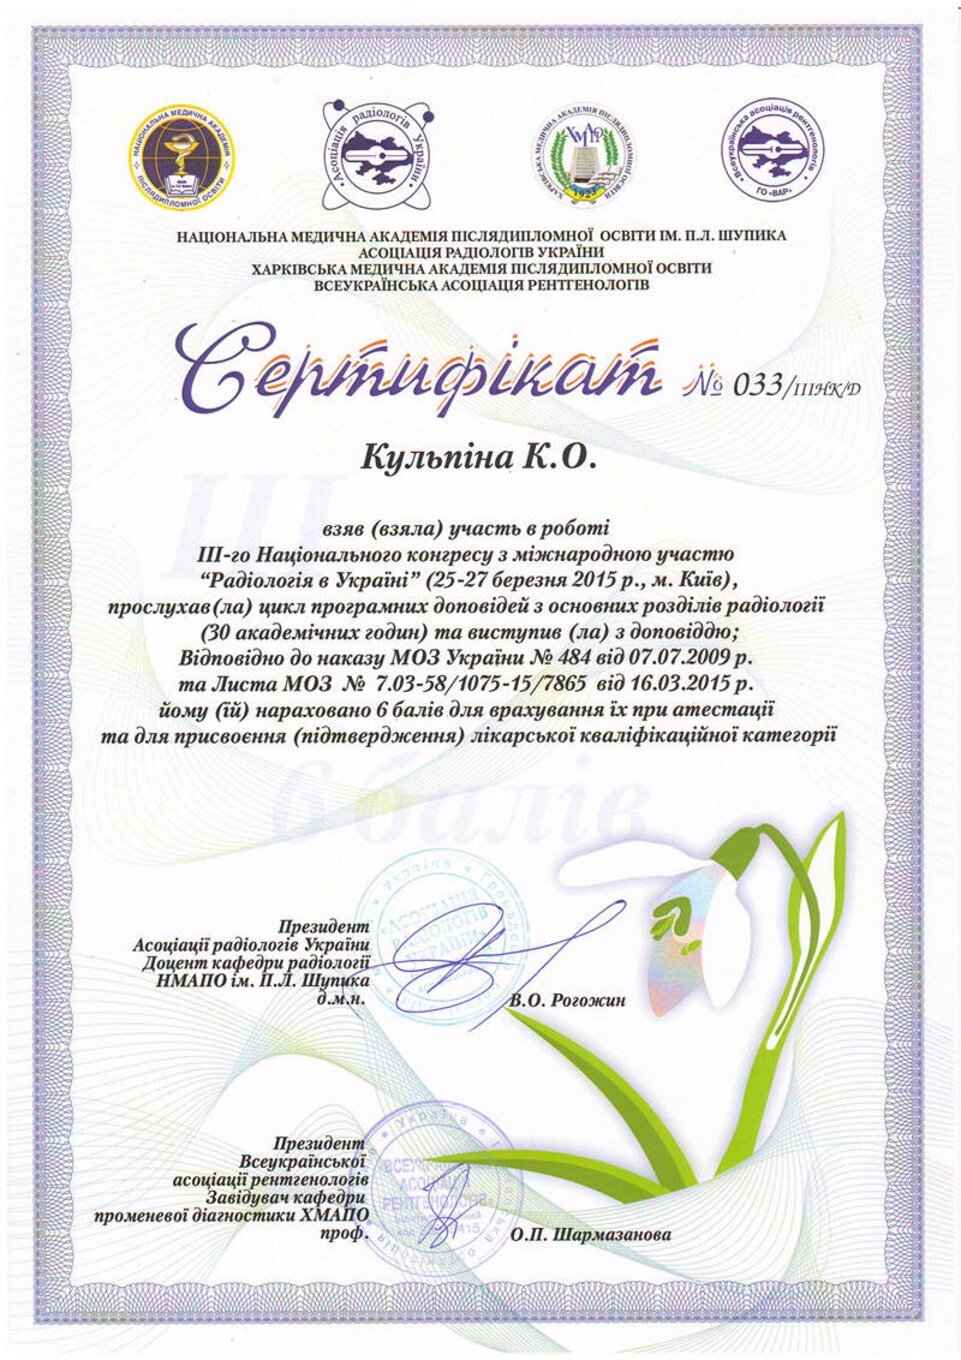 certificates/kulpina-katerina-oleksandrivna/hemomedika-cert-kulpina-2015-kiev-3-y_kongress_radiologiya.jpg